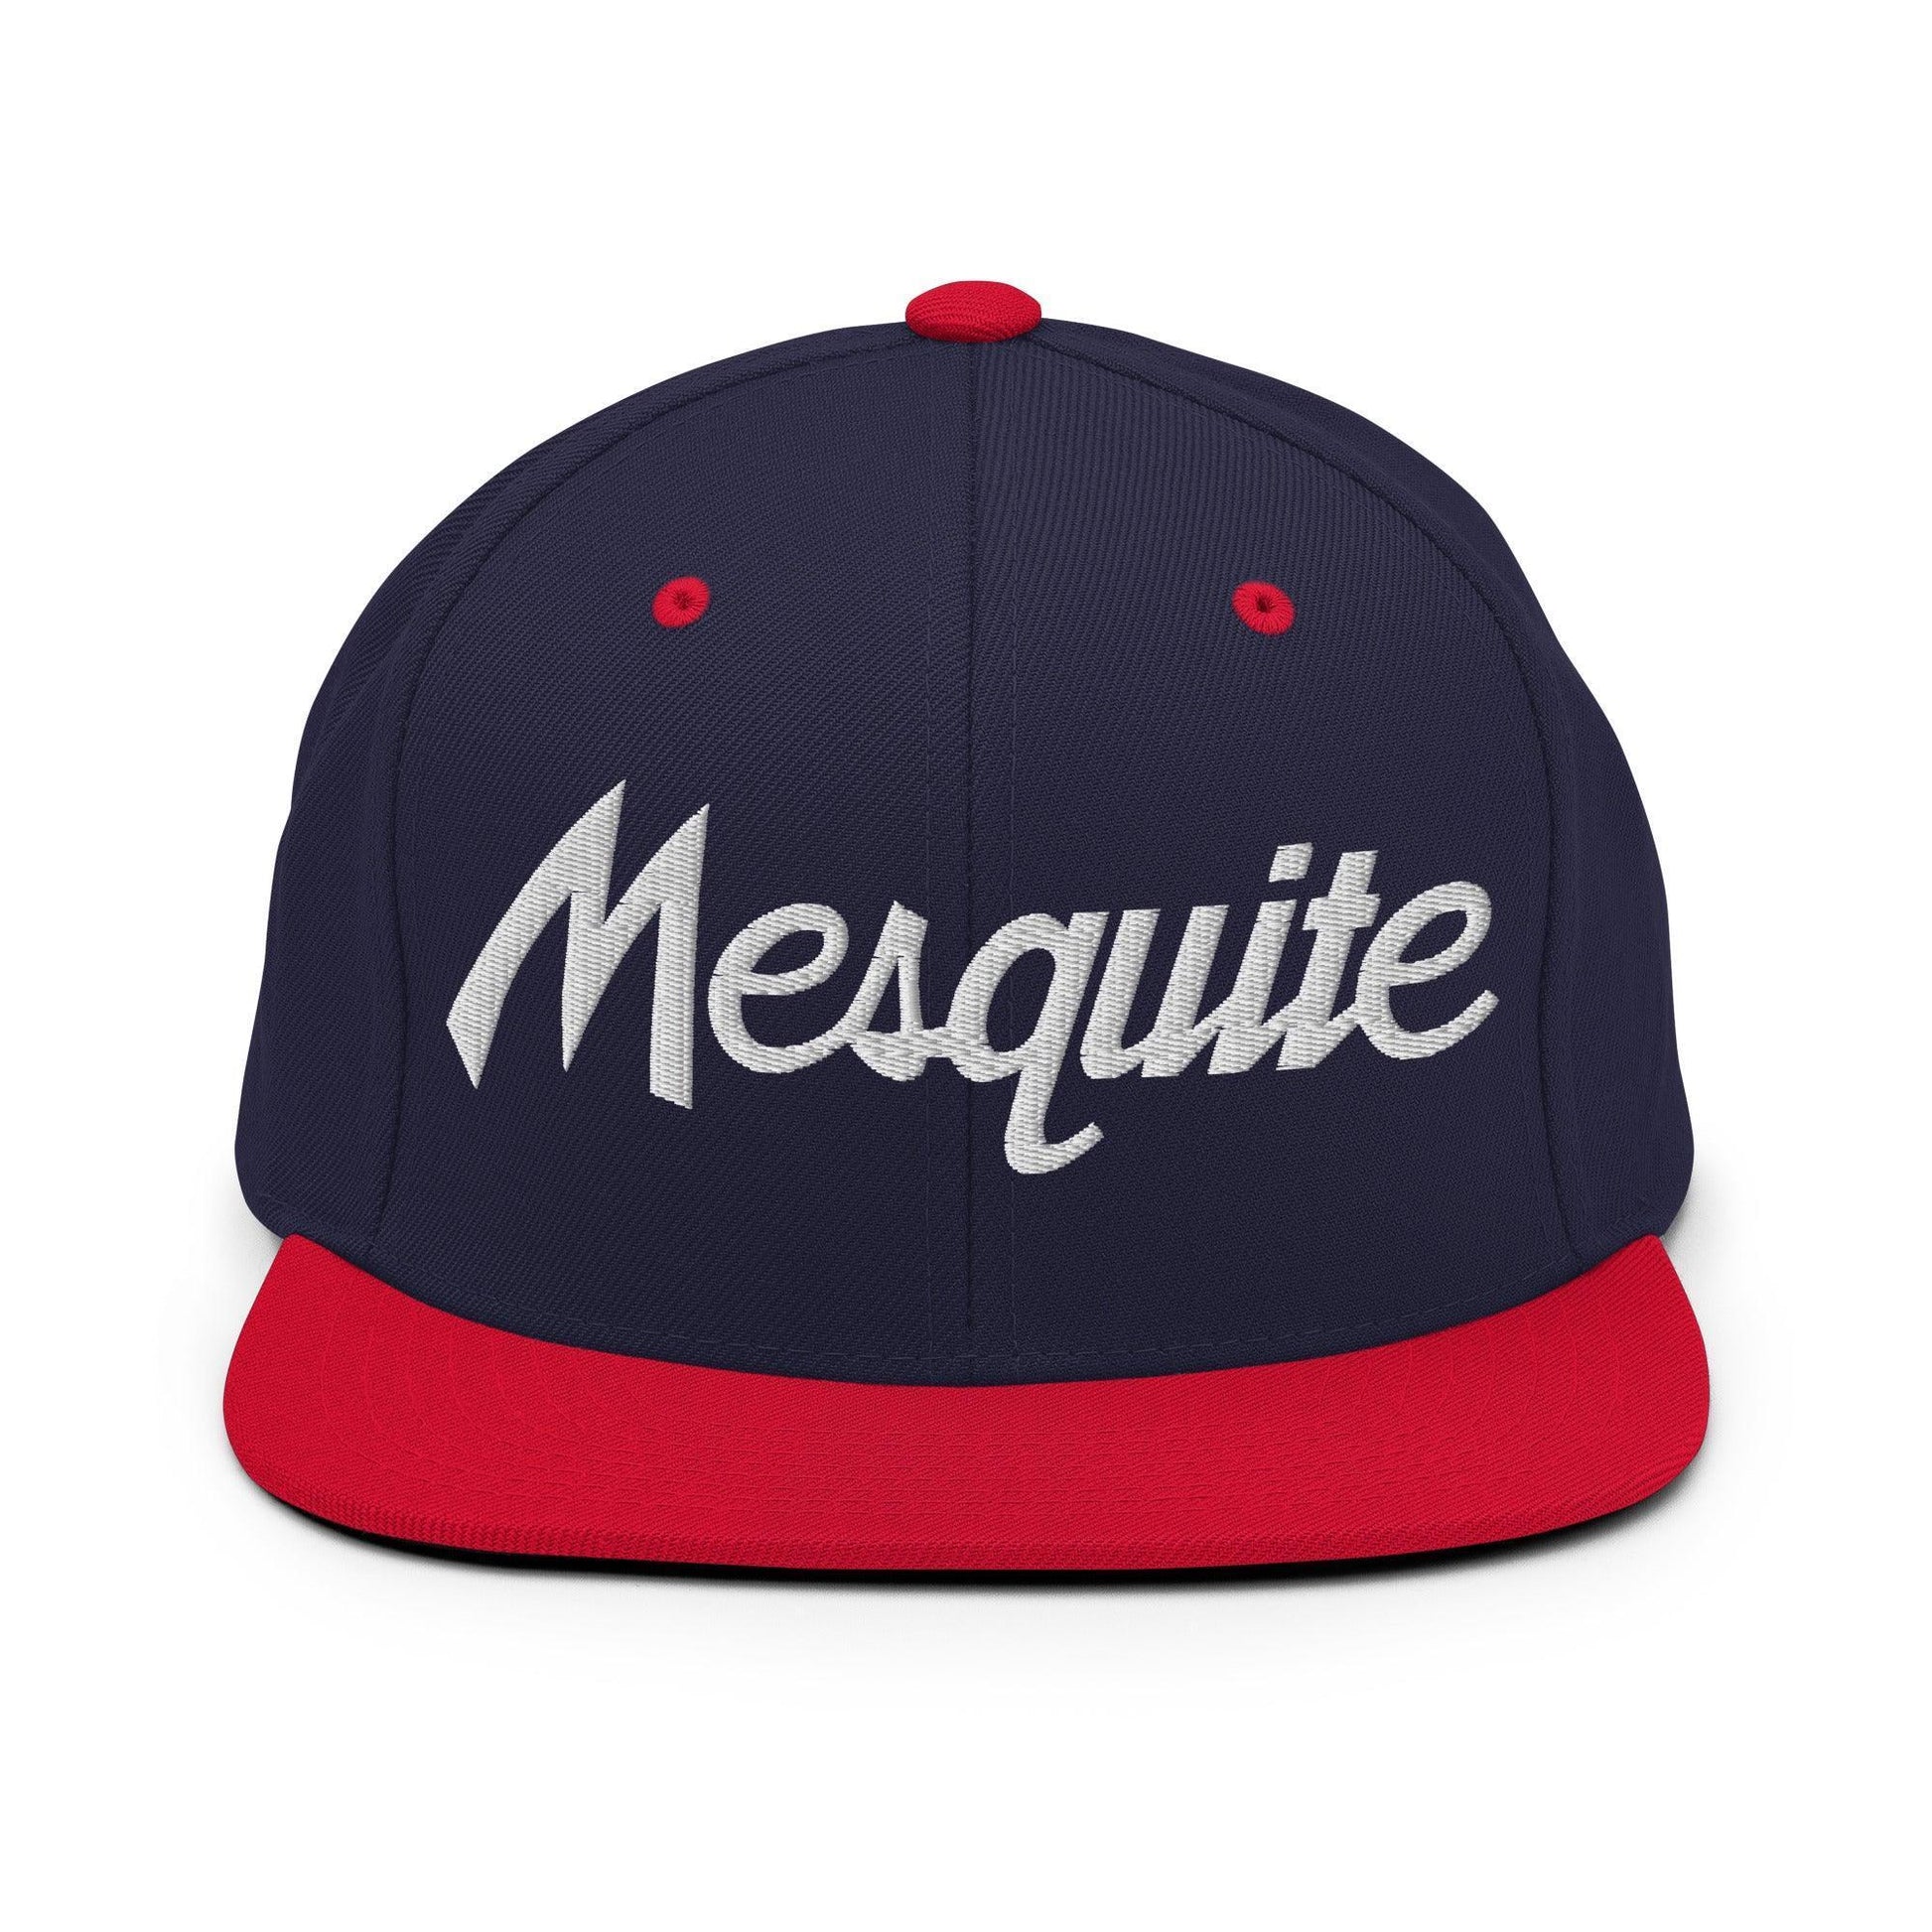 Mesquite Script Snapback Hat Navy/ Red